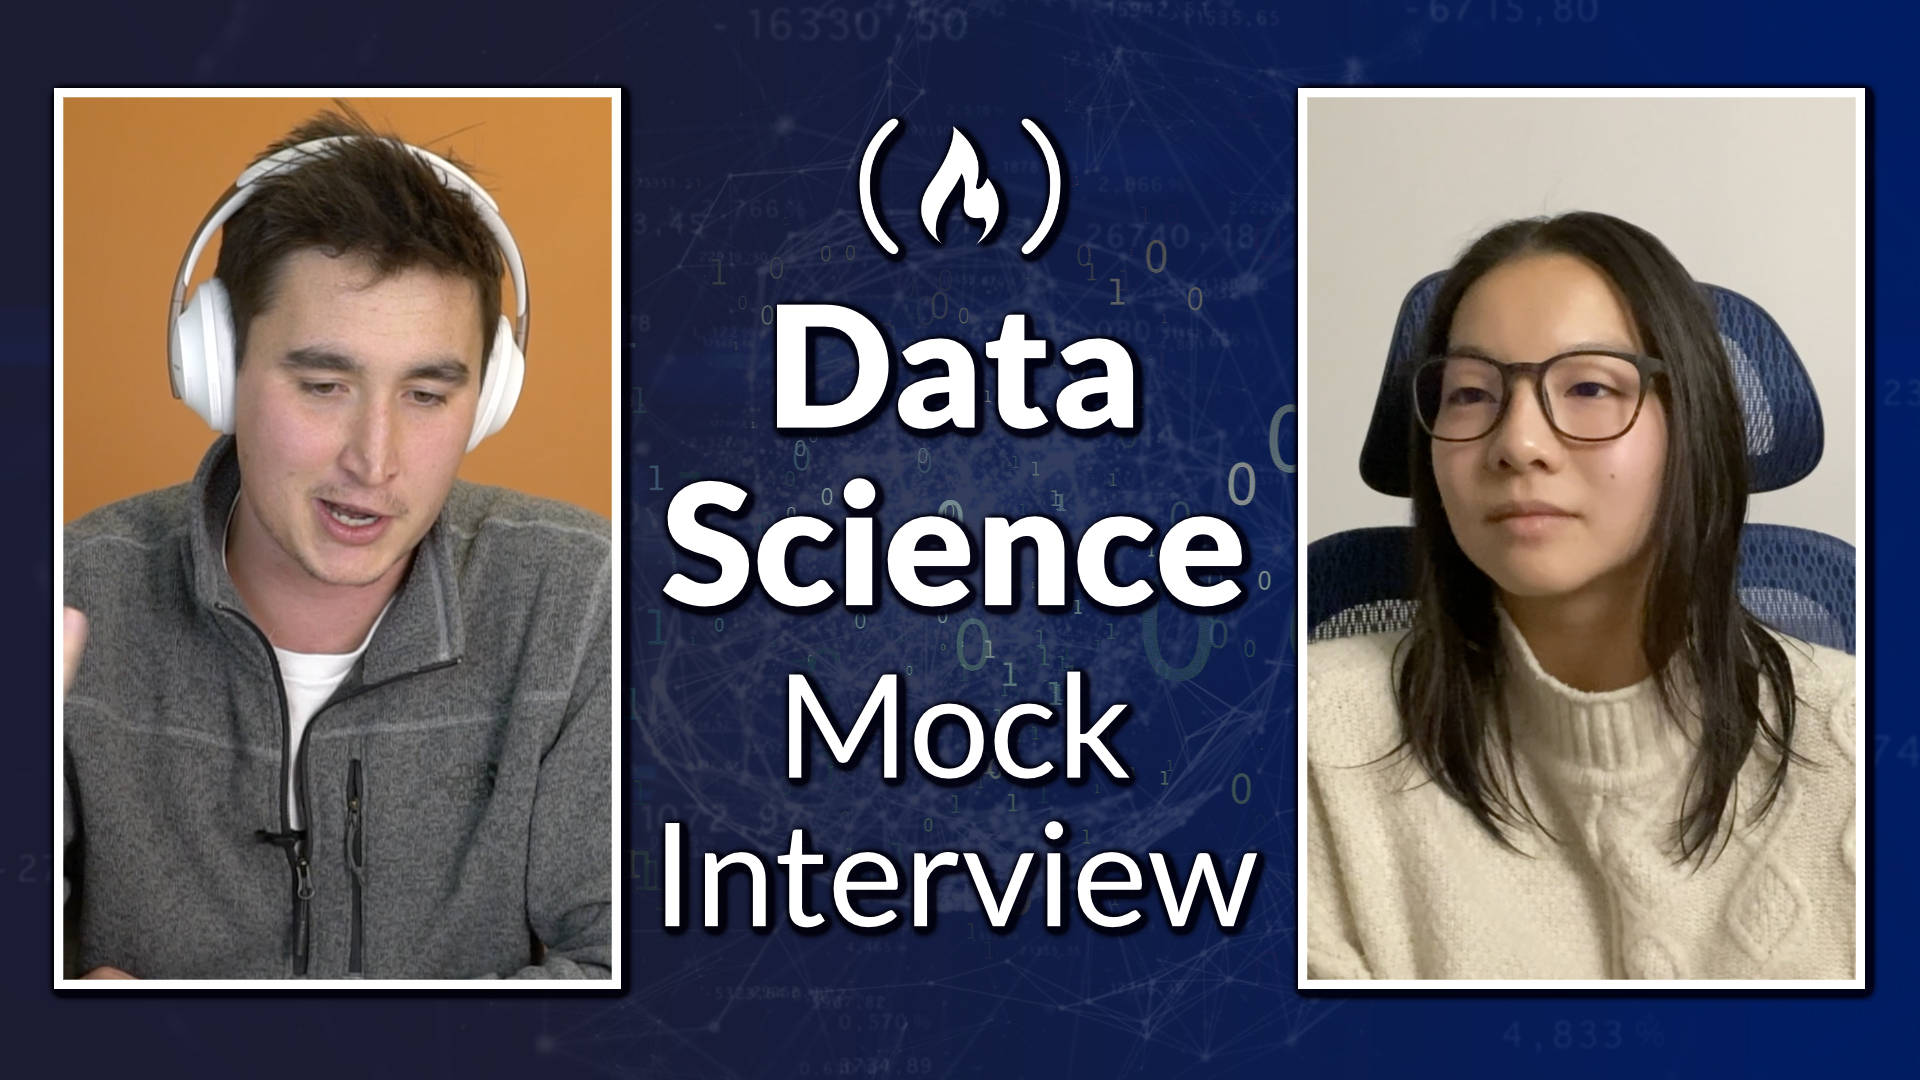 Mock Data Science Job Interview